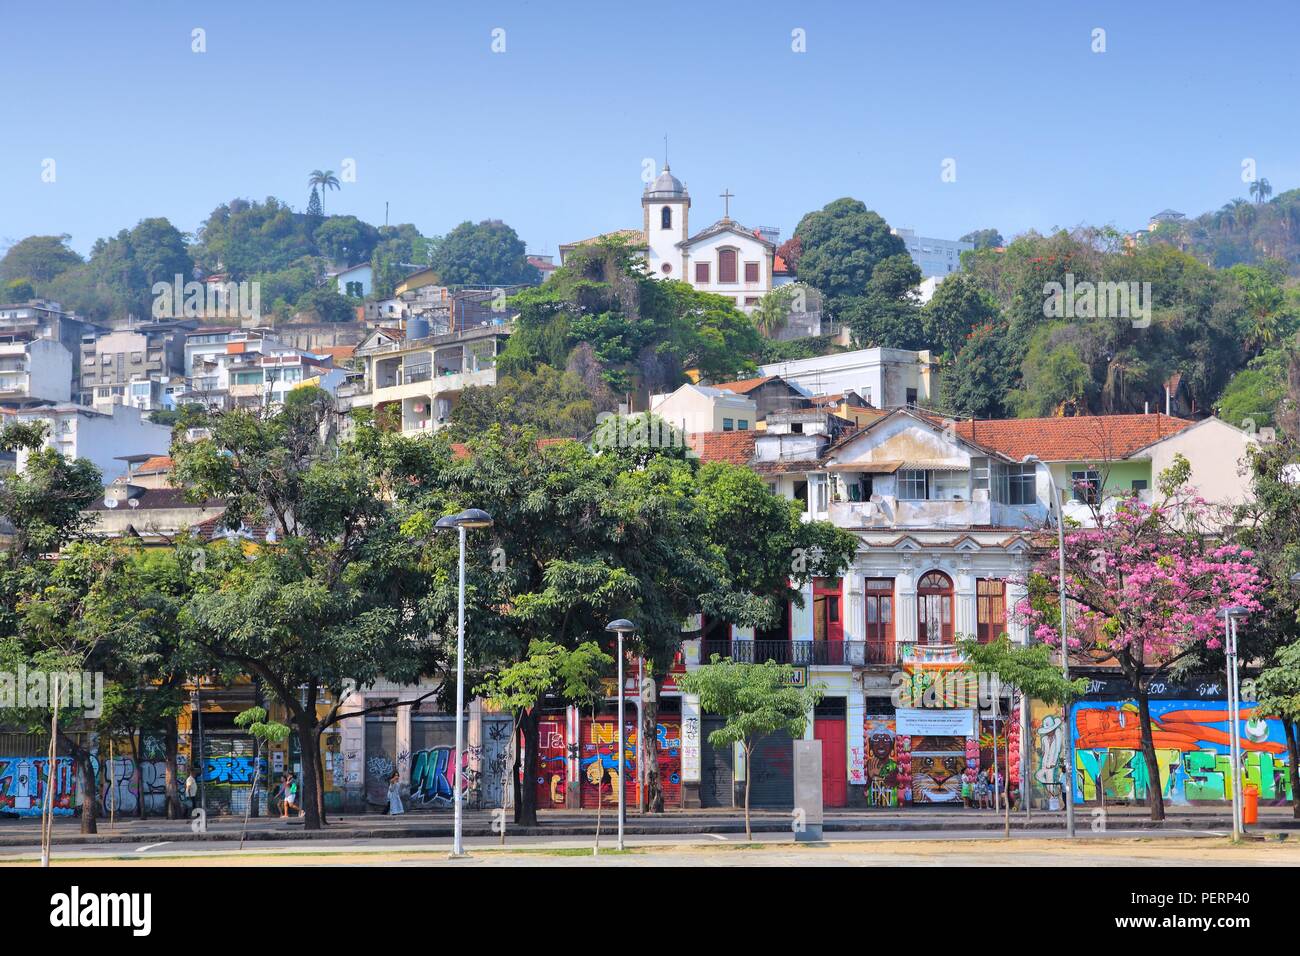 RIO DE JANEIRO, BRAZIL - OCTOBER 19, 2014: People visit Santa Teresa neighborhood in Rio de Janeiro. In 2013 1.6 million international tourists visite Stock Photo